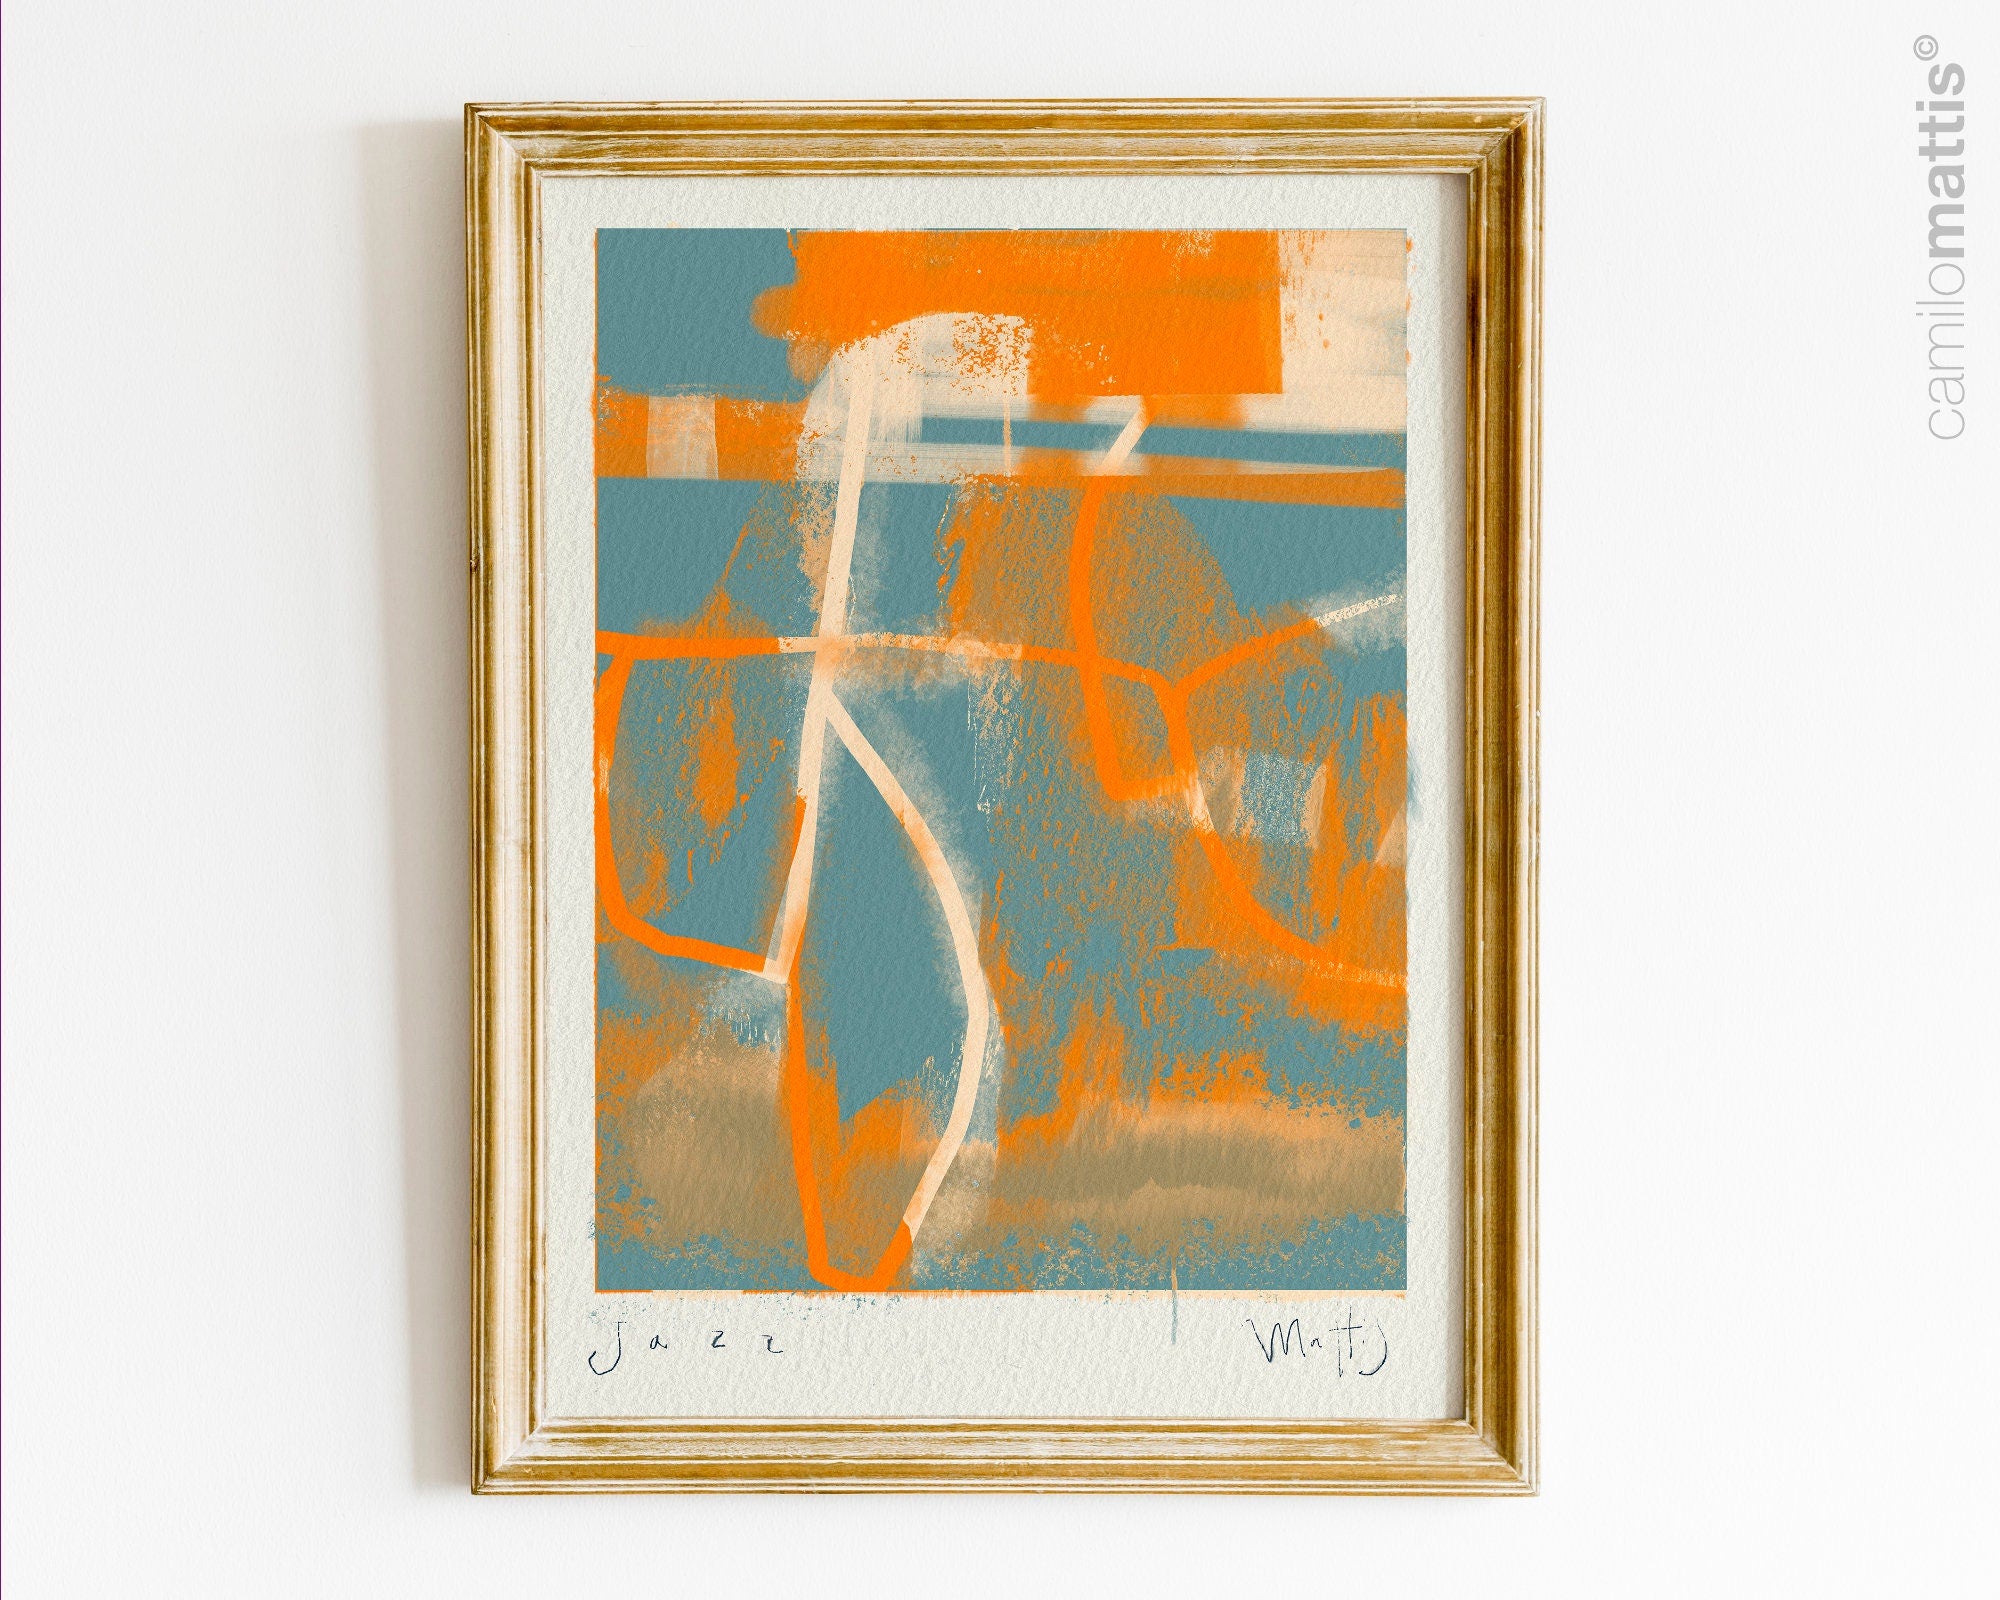 Jazz in NY Orange and blue large poster print, minimalist modern art appartement decor by Camilo Mattis